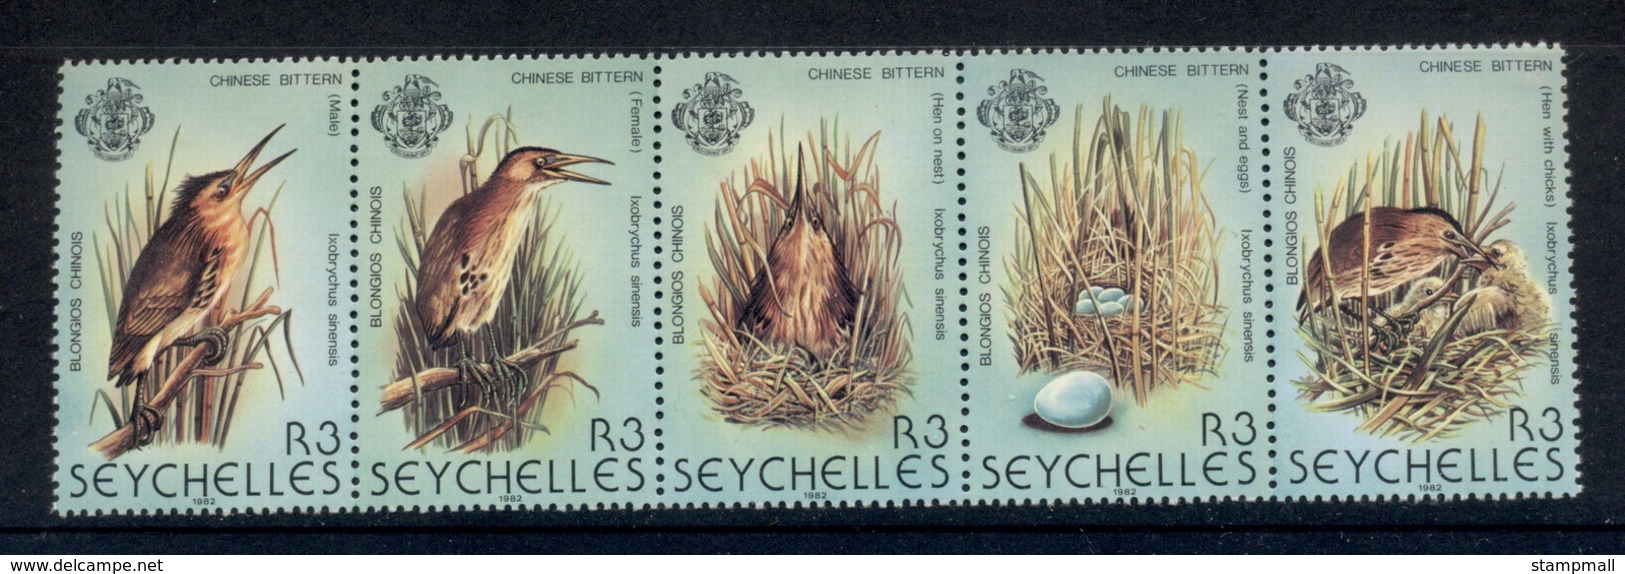 Seychelles 1982 Birds, Chinese Bittern MUH - Seychelles (1976-...)